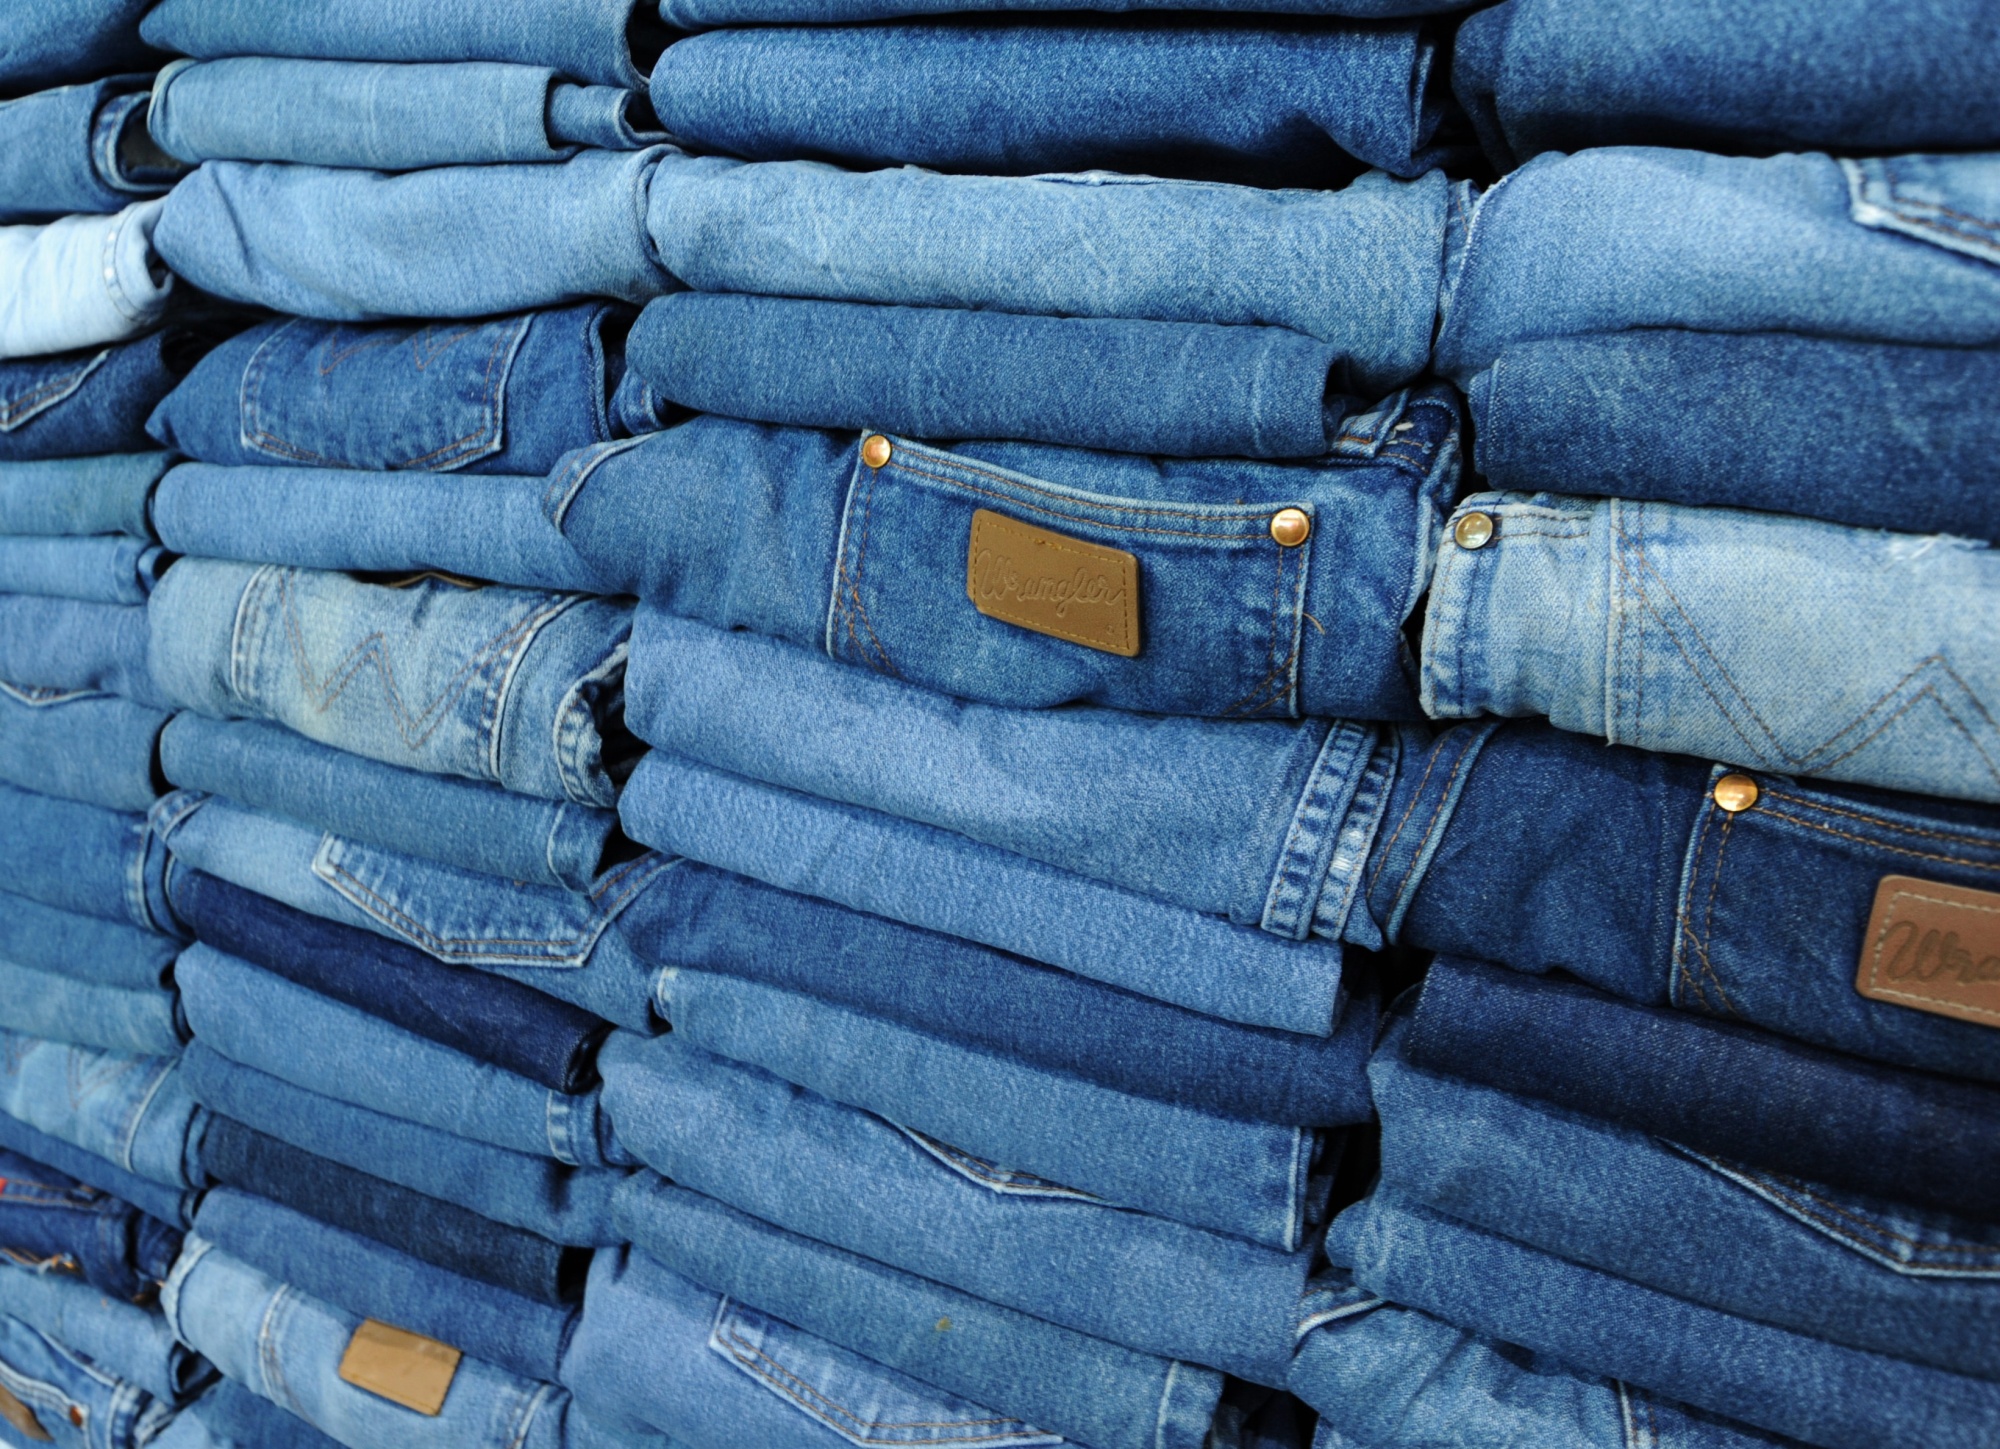 Assorted jeans wholesale in Wadala #jeans #denim #clothing #wholesale # market | Instagram